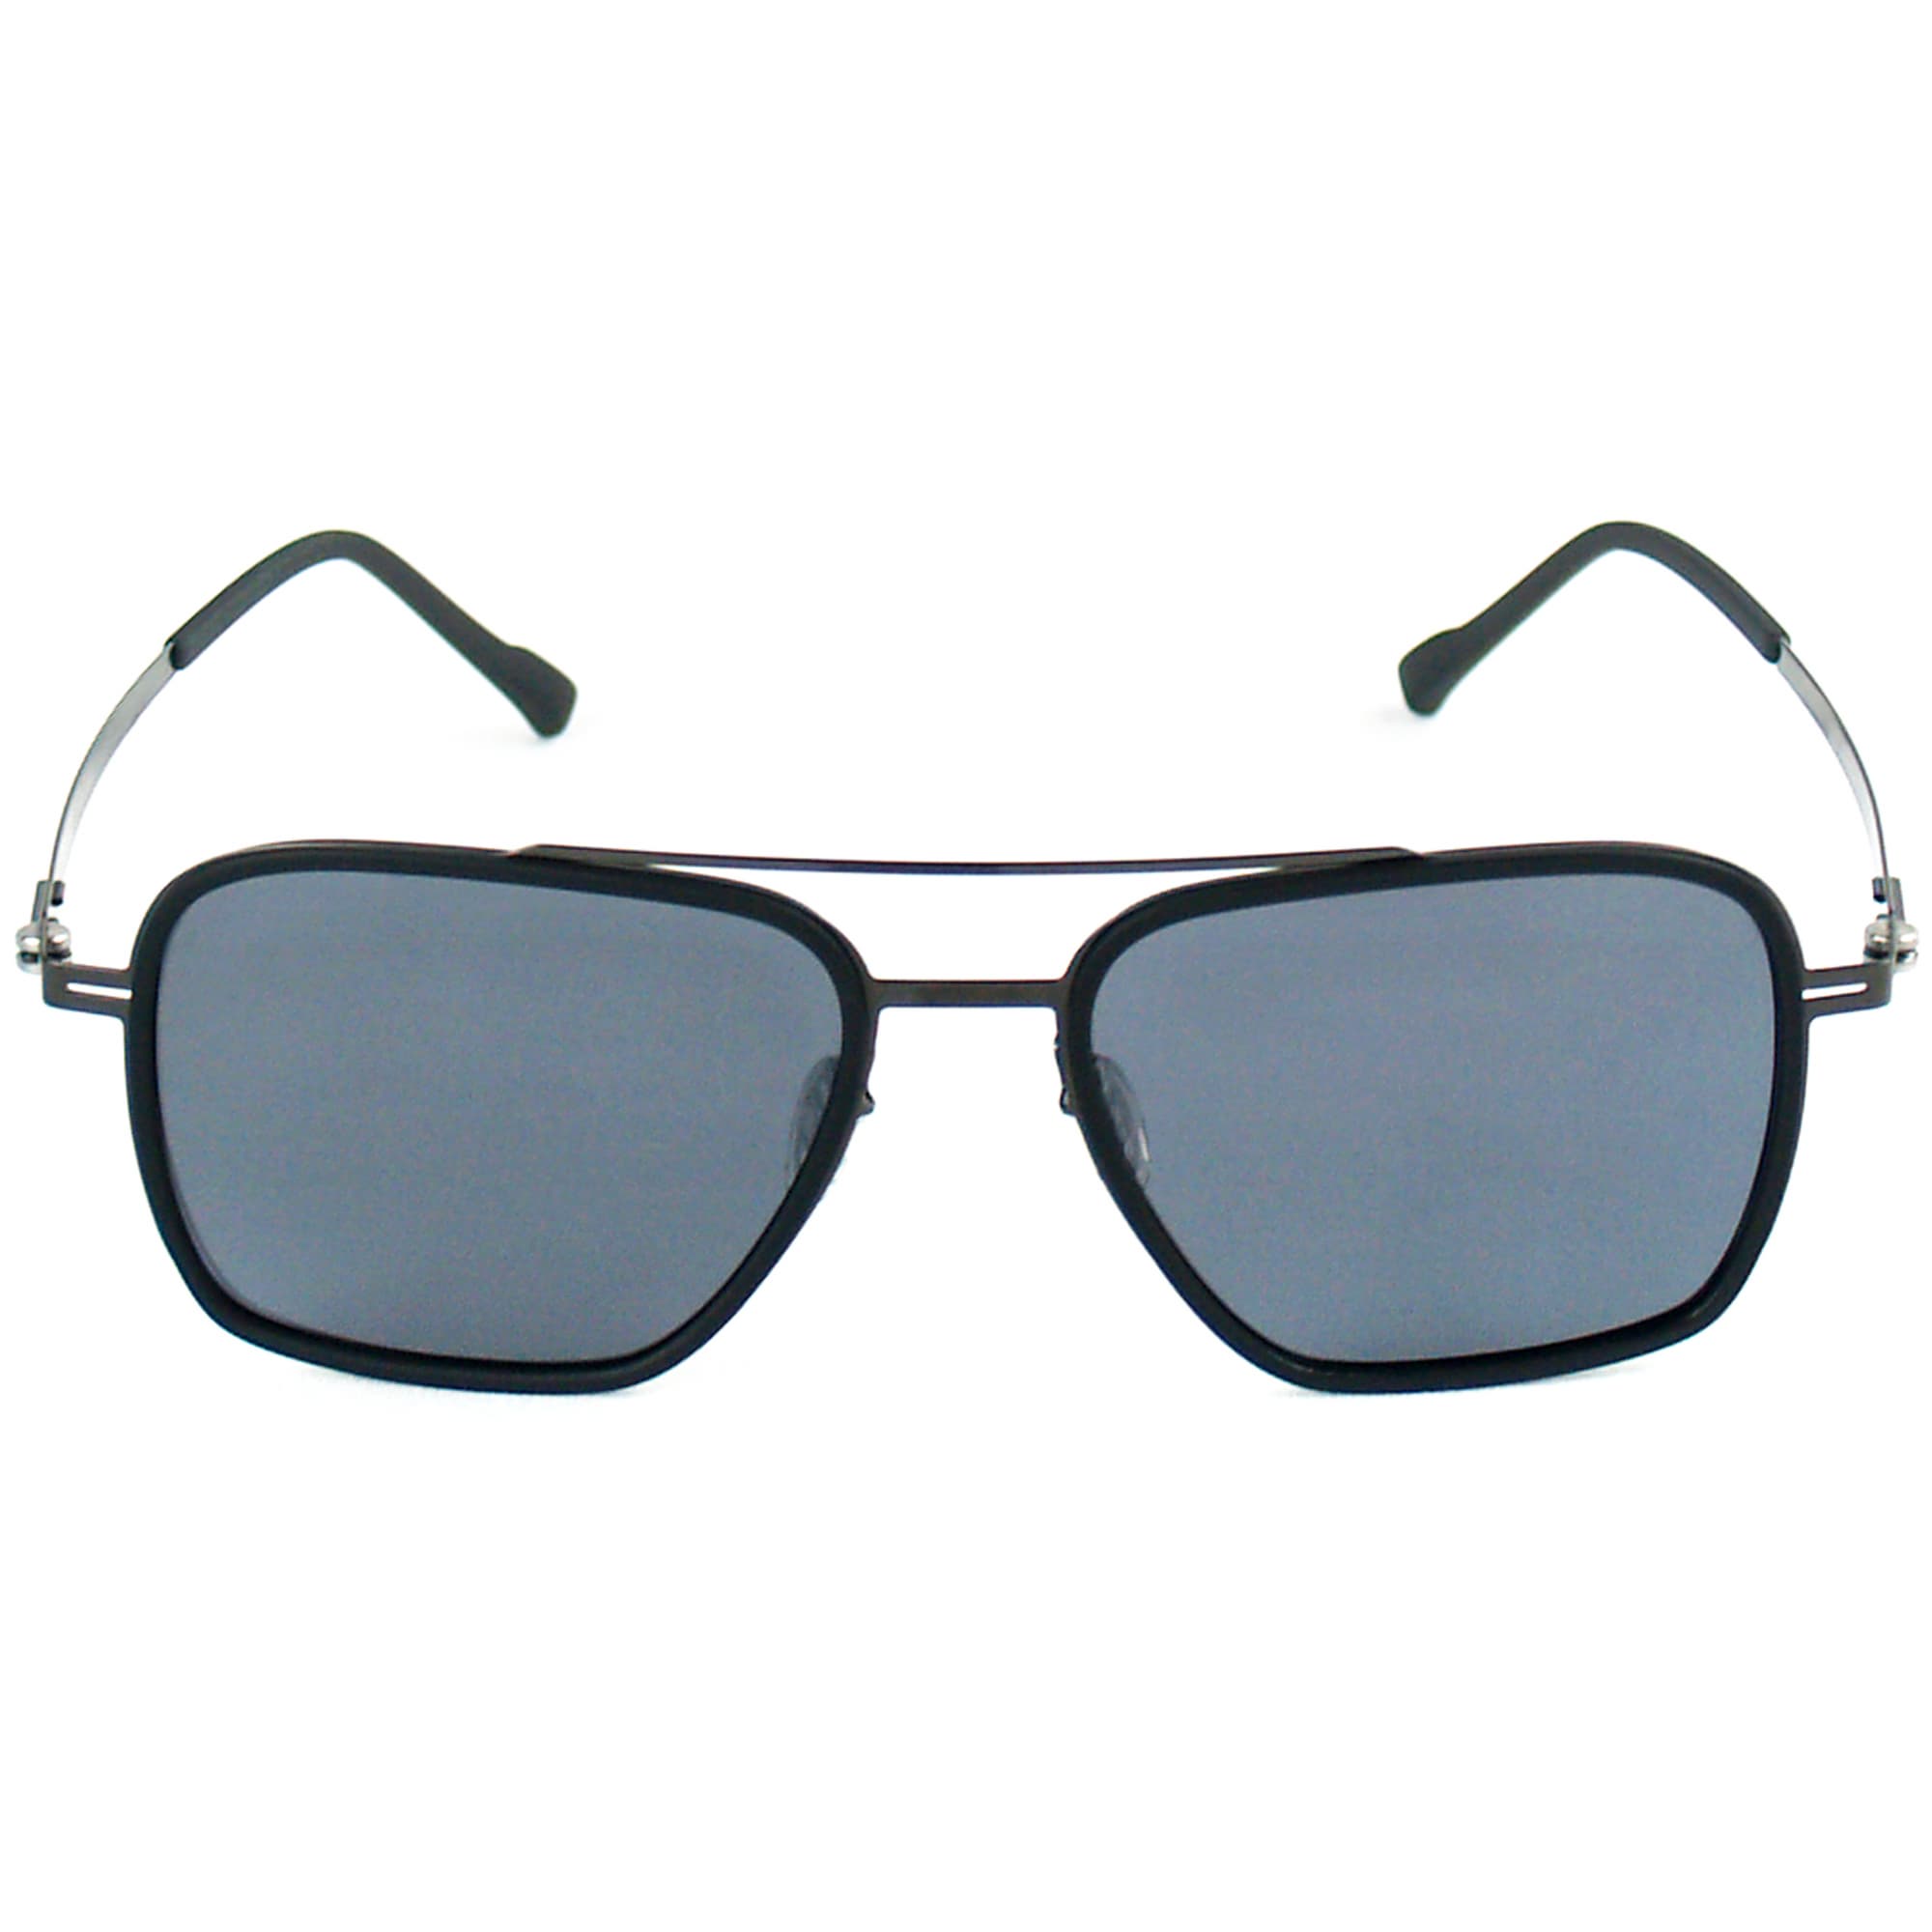 AviatorII   Acetate _ Thin Stainless Steel  Frame Sunglasses